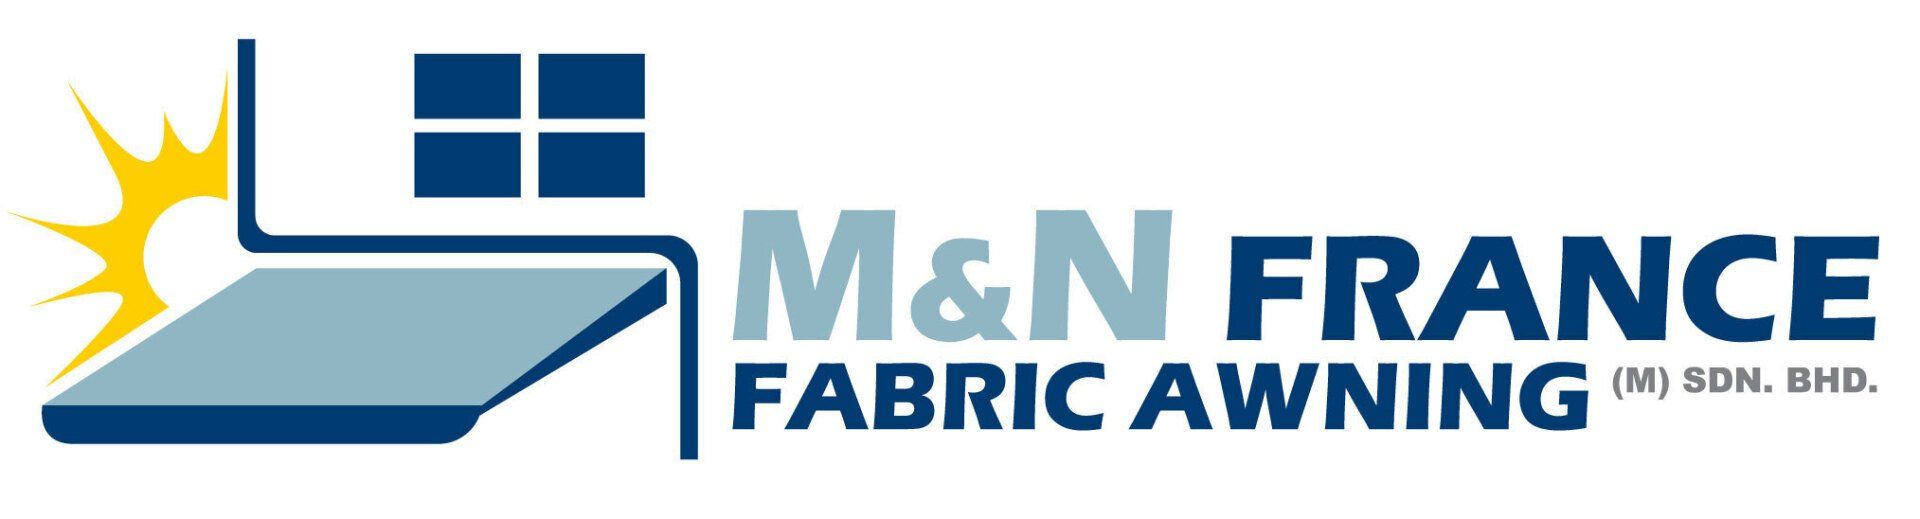 M & N France Fabric Awning (M) Sdn Bhd